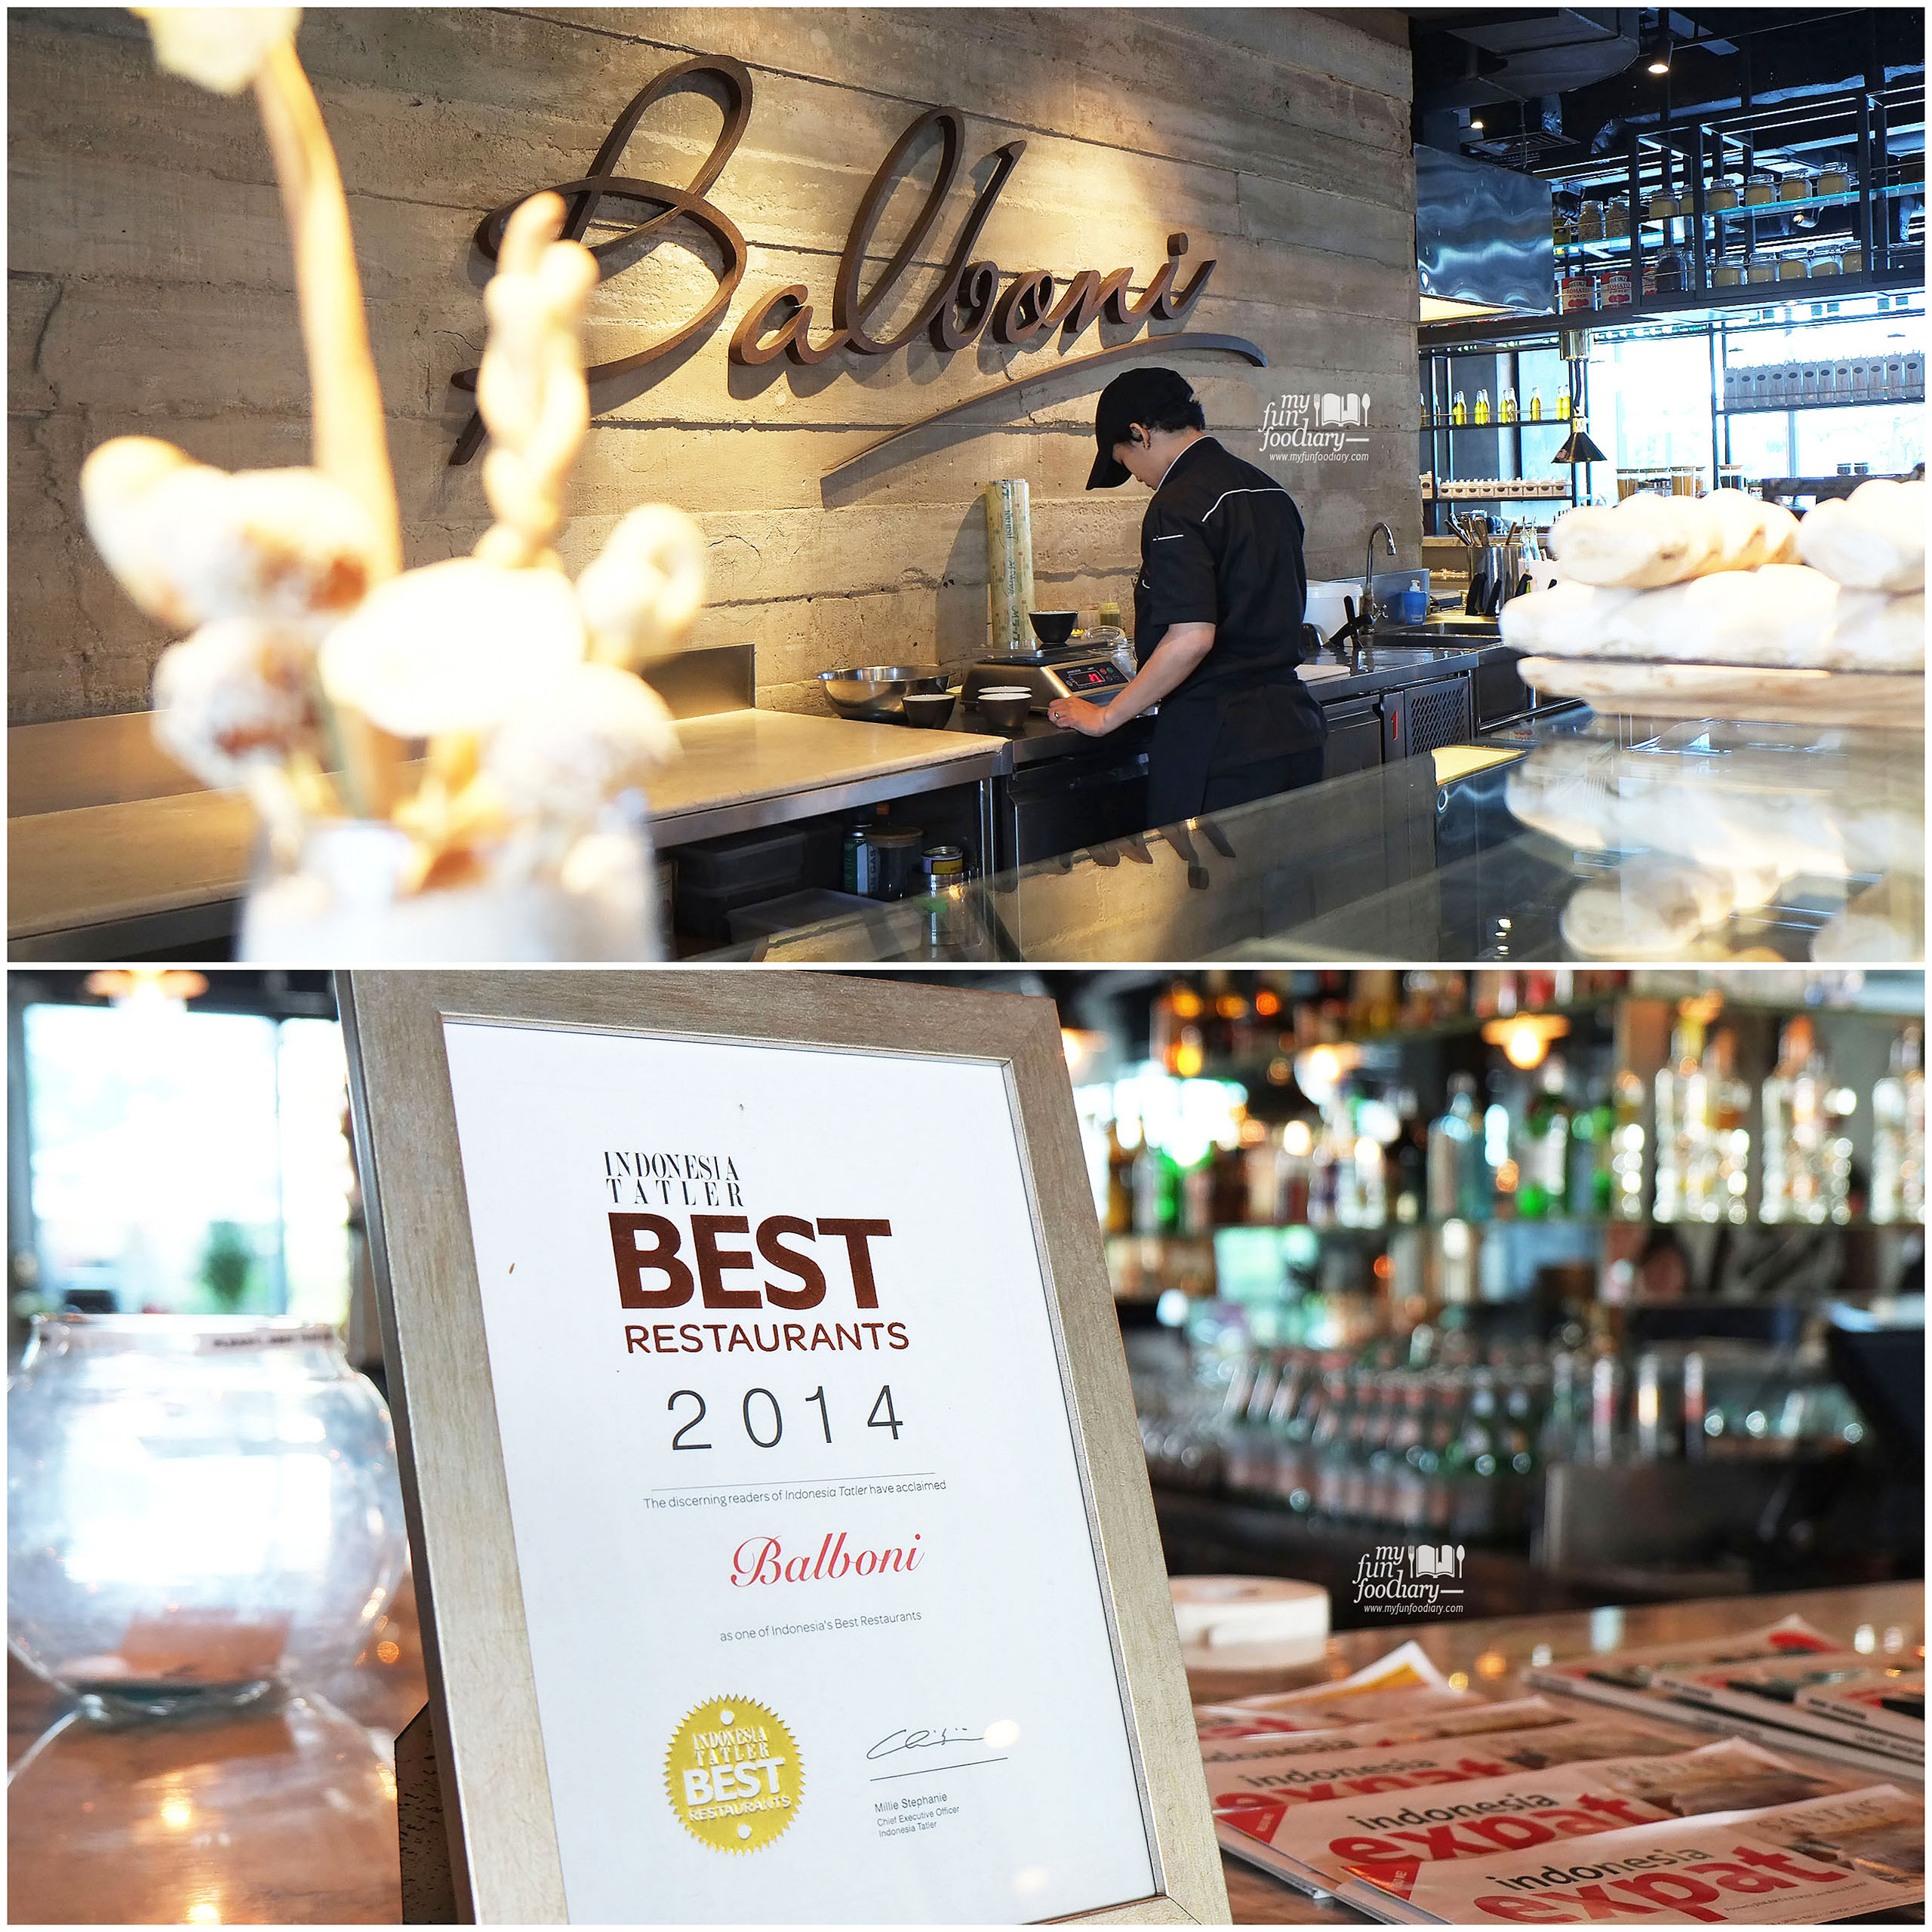 Balboni Ristorante Awarded Best Restaurant by Myfunfoodiary